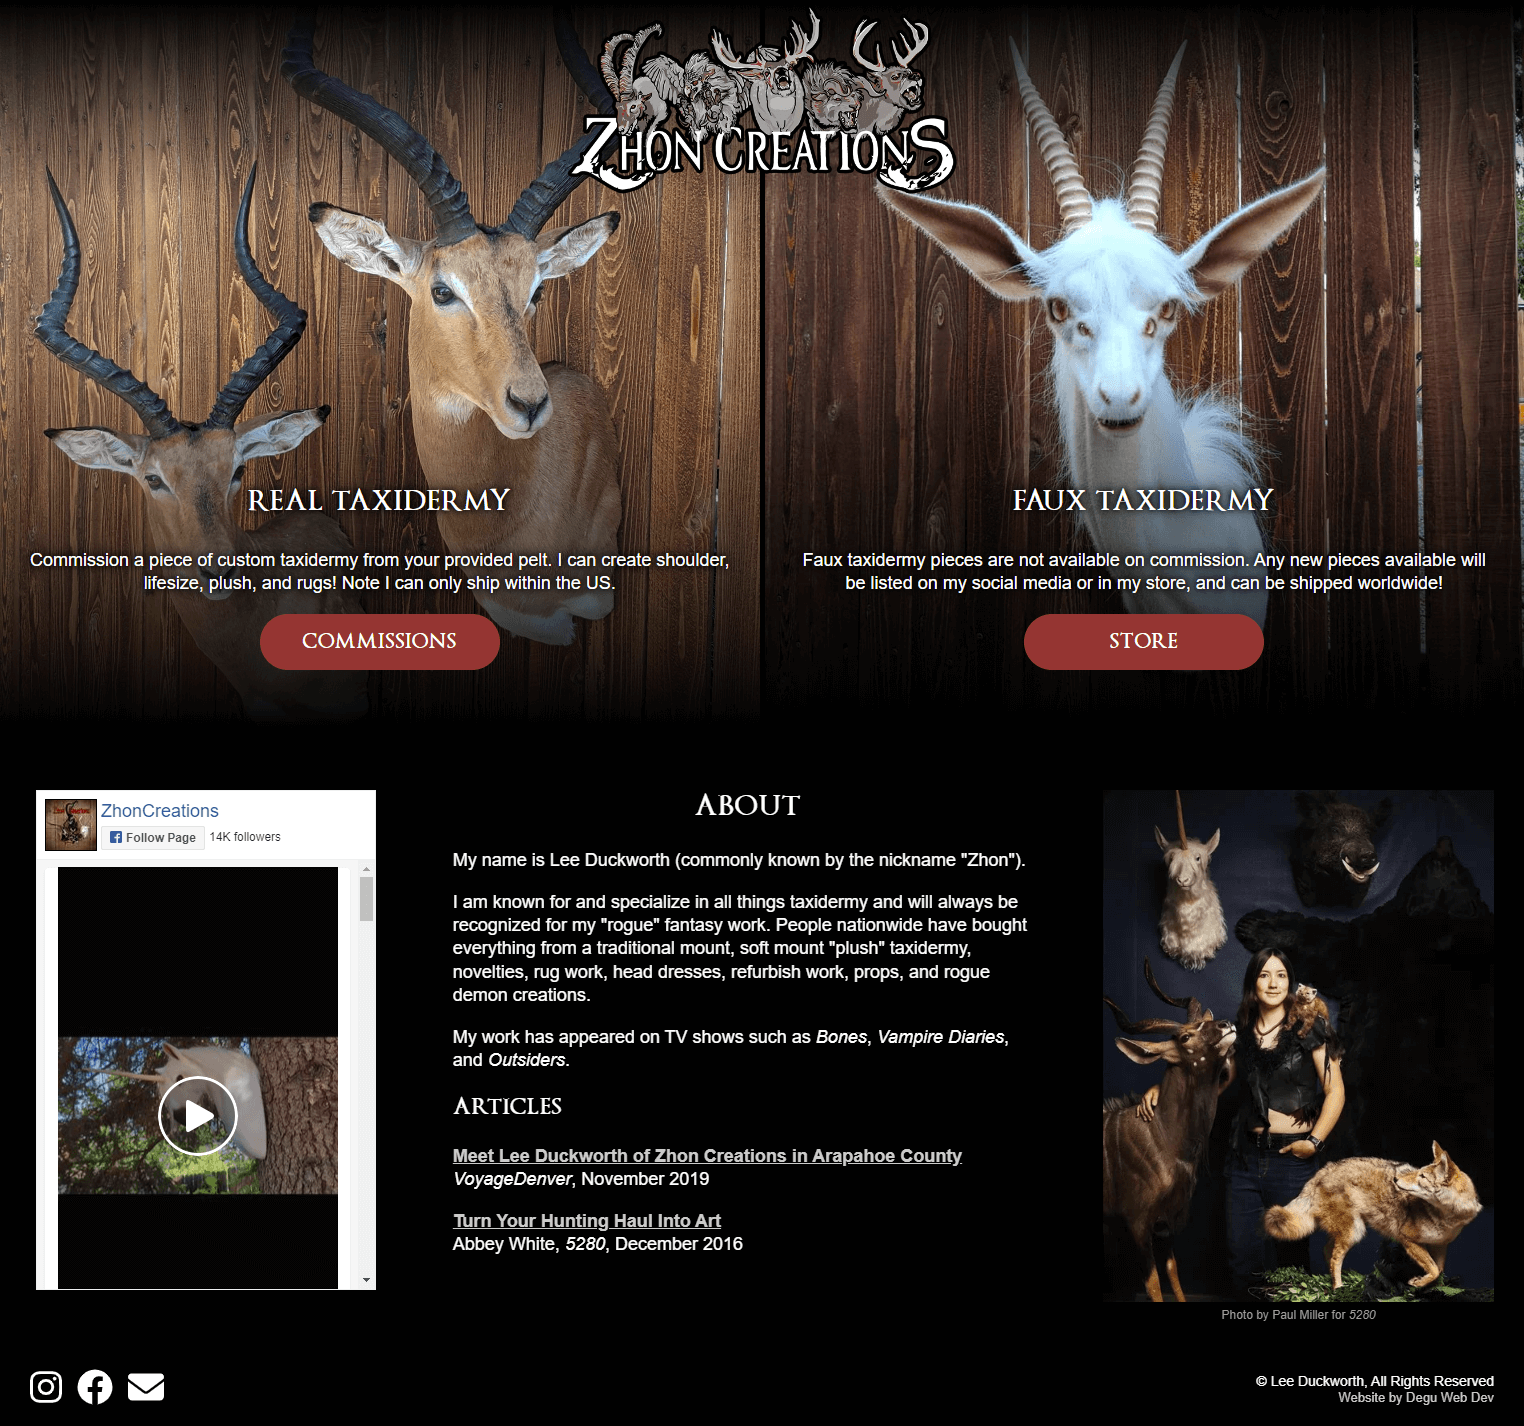 Zhon Creations Website (opens in new window)